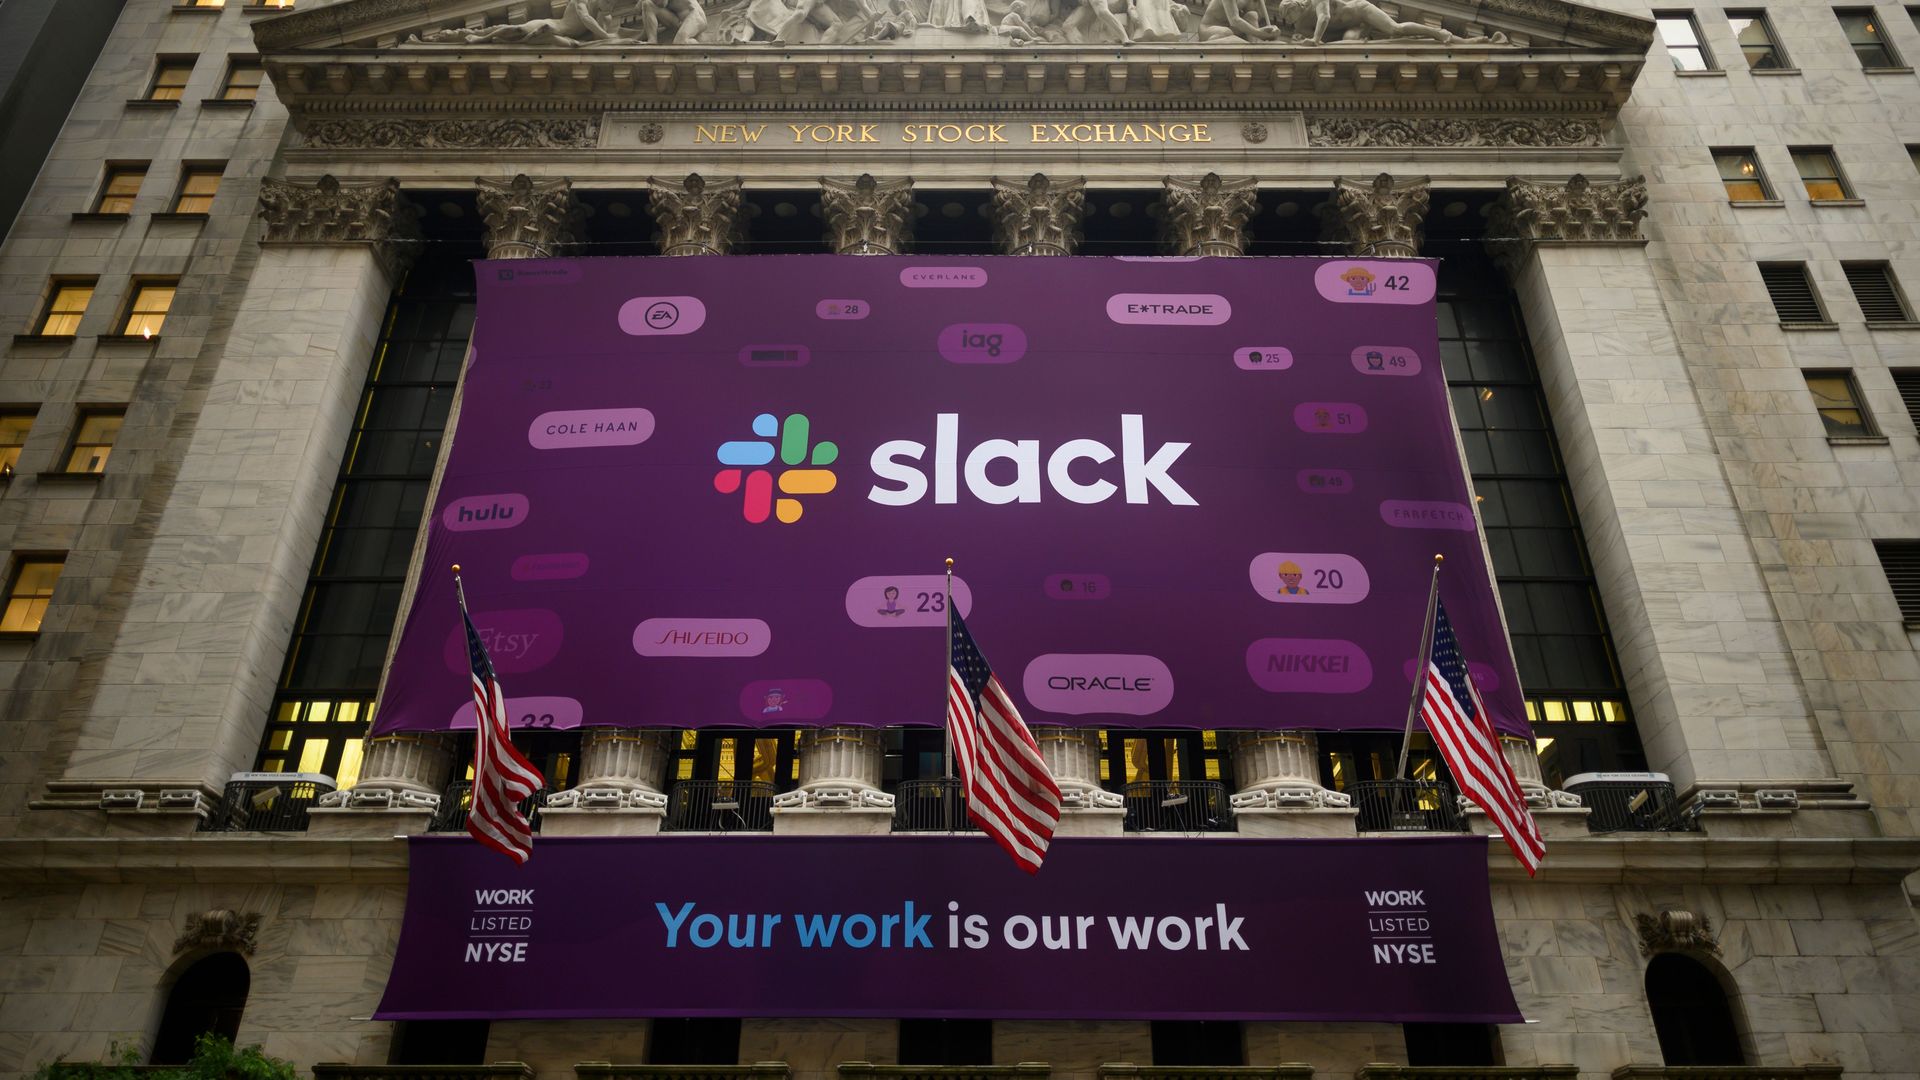 Slack goes public at the New York Stock Exchange